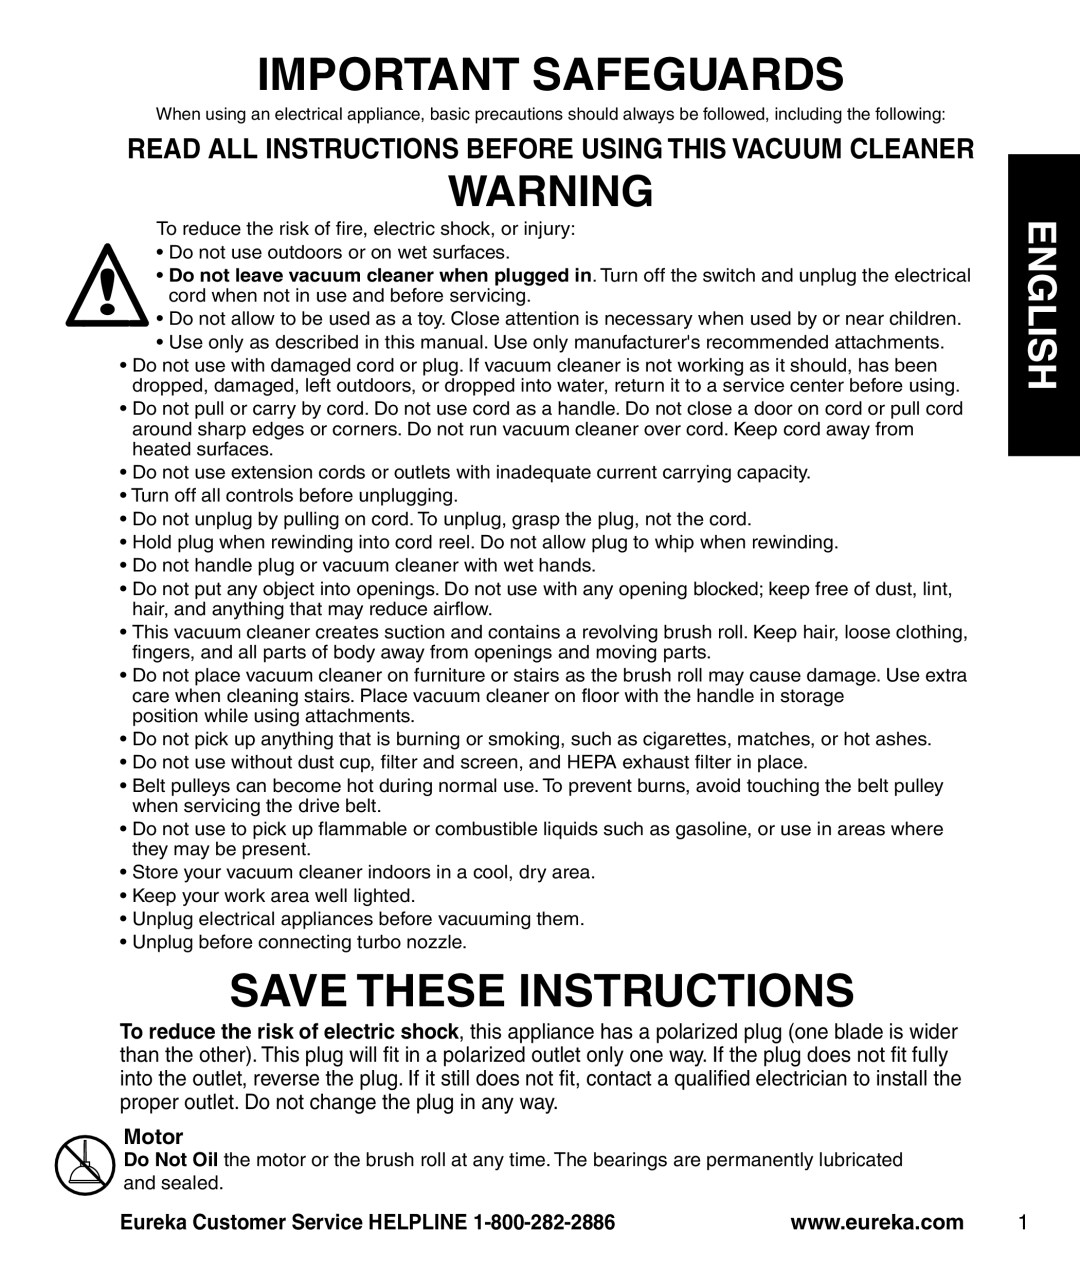 Eureka AS1001A manual English, Motor, Important Safeguards, Save These Instructions, Eureka Customer Service HELPLINE 